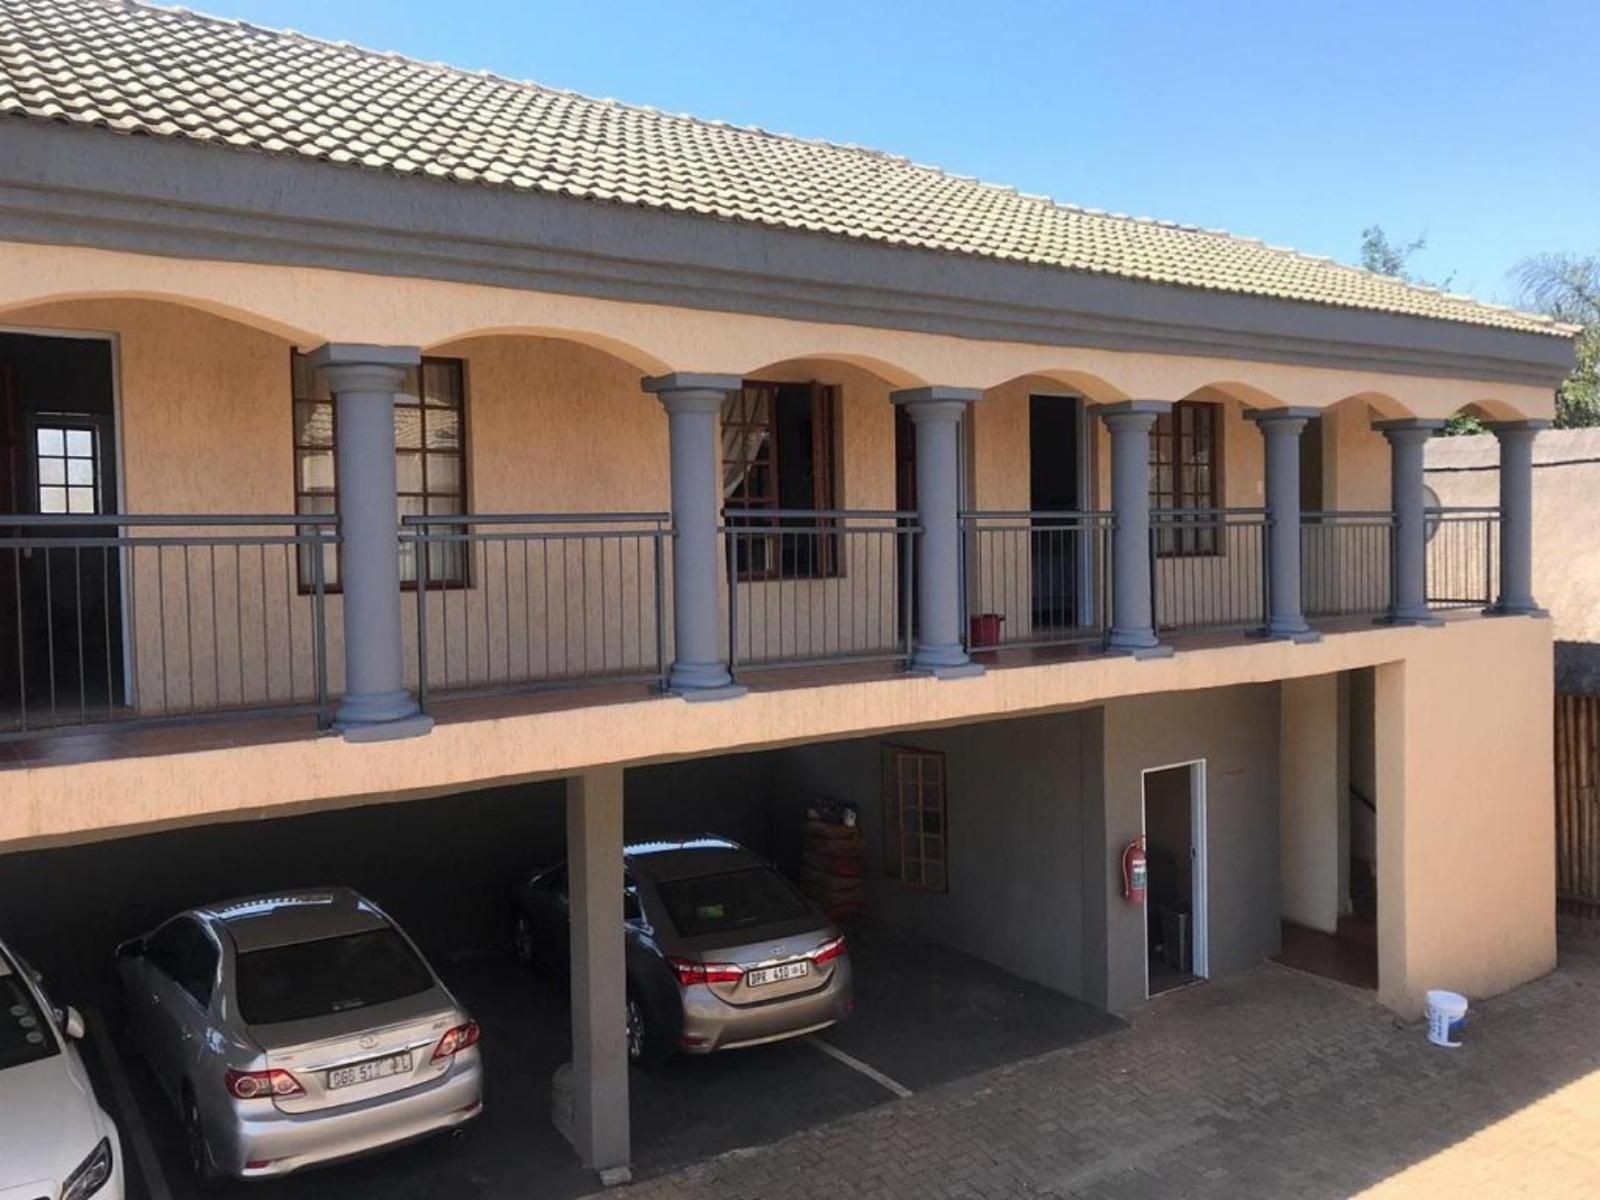 Tshedza Guest Lodge Makhado Louis Trichardt Limpopo Province South Africa House, Building, Architecture, Car, Vehicle